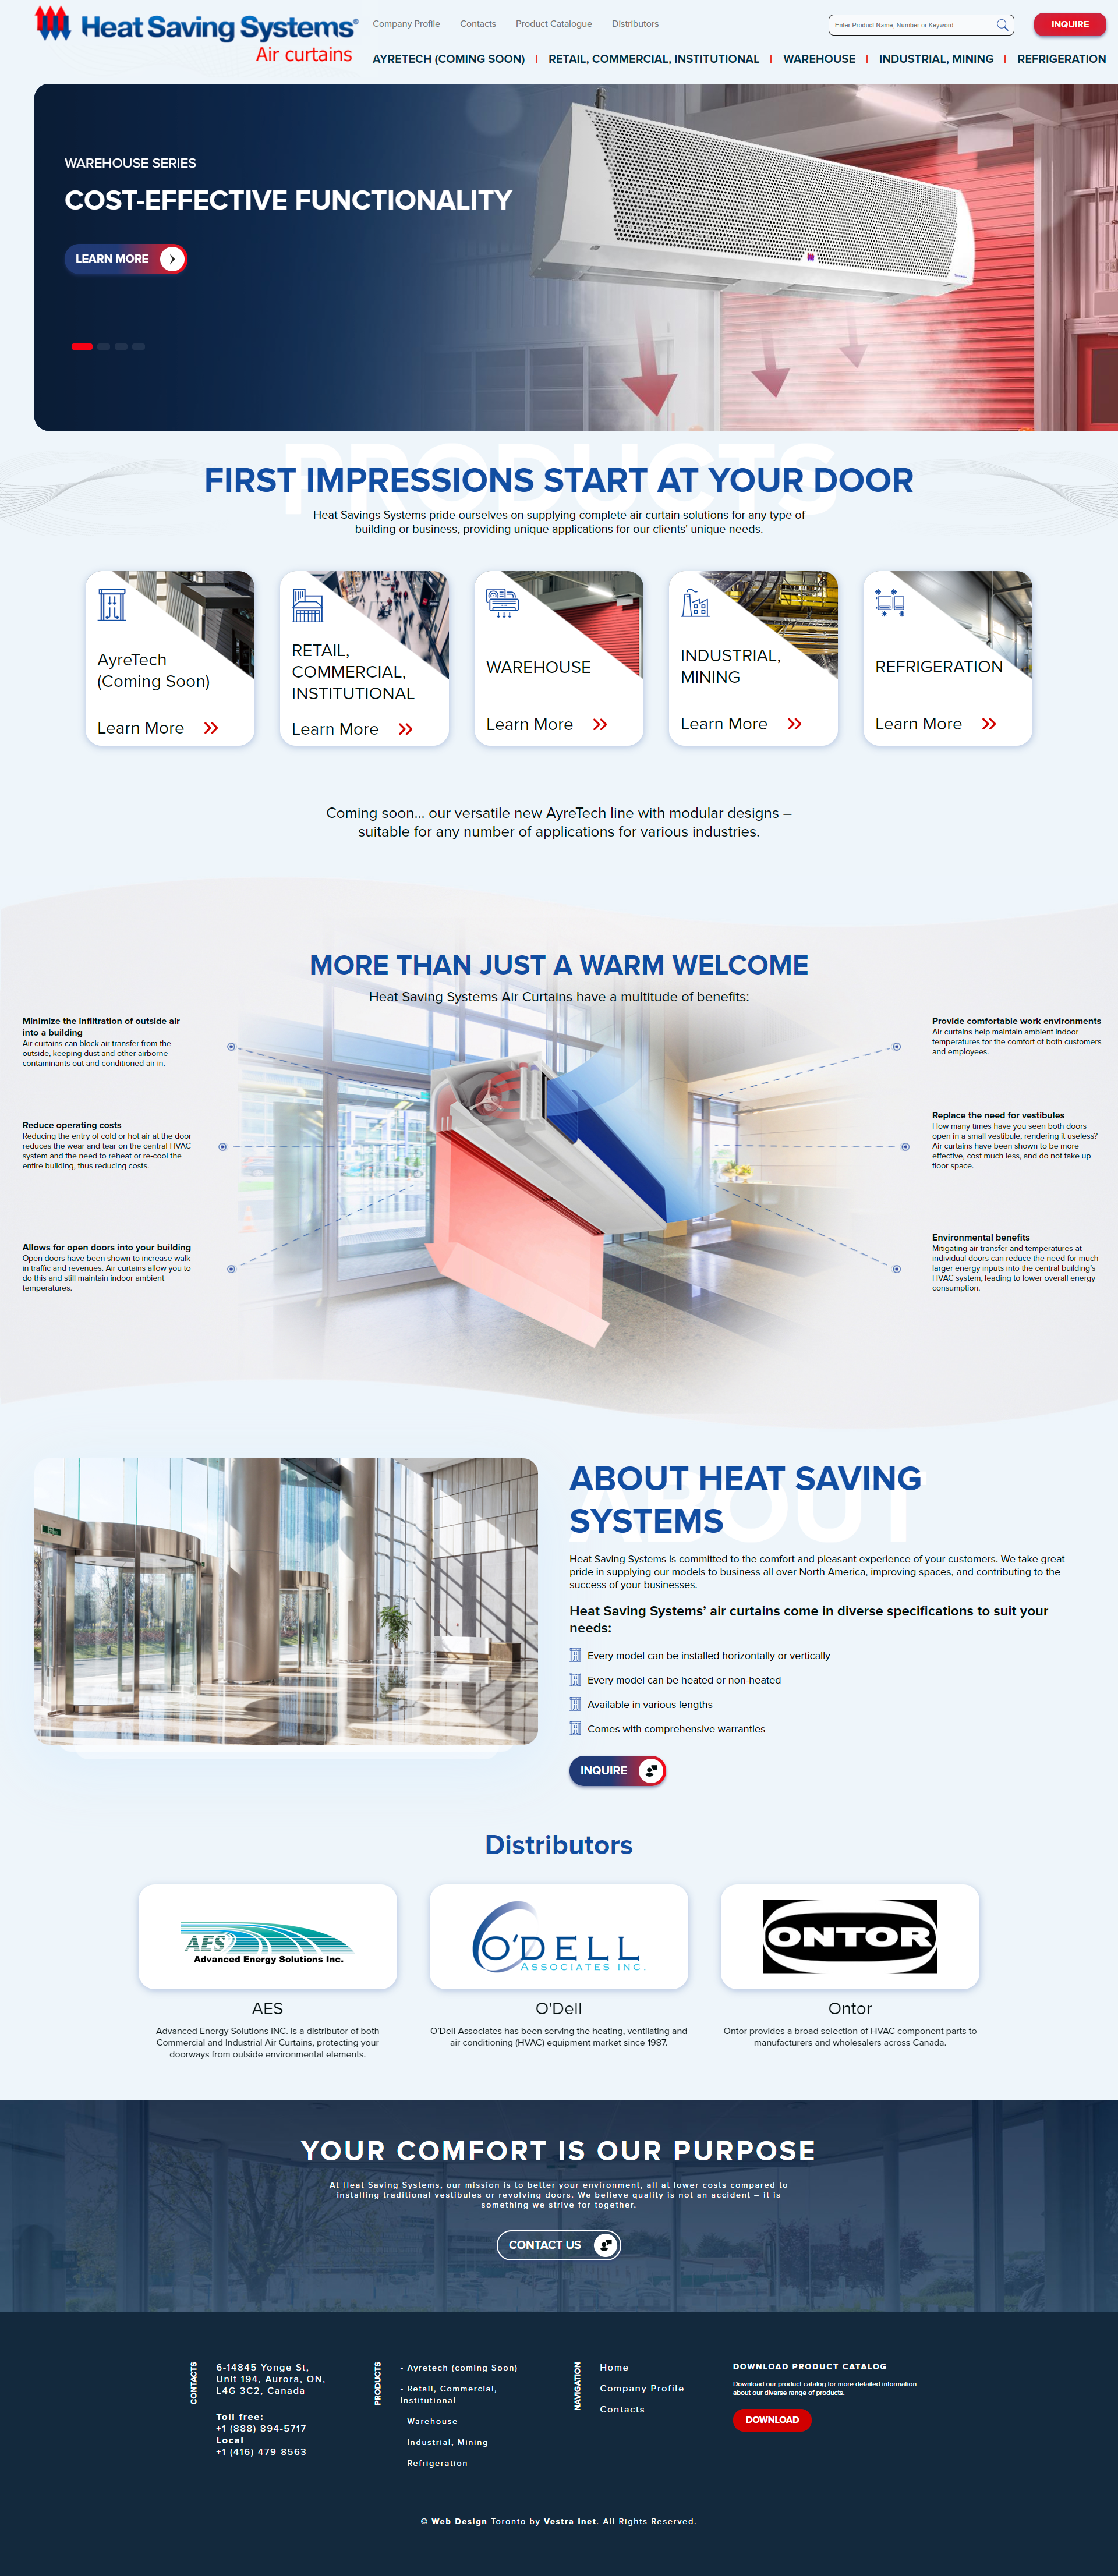 Heat Saving Systems